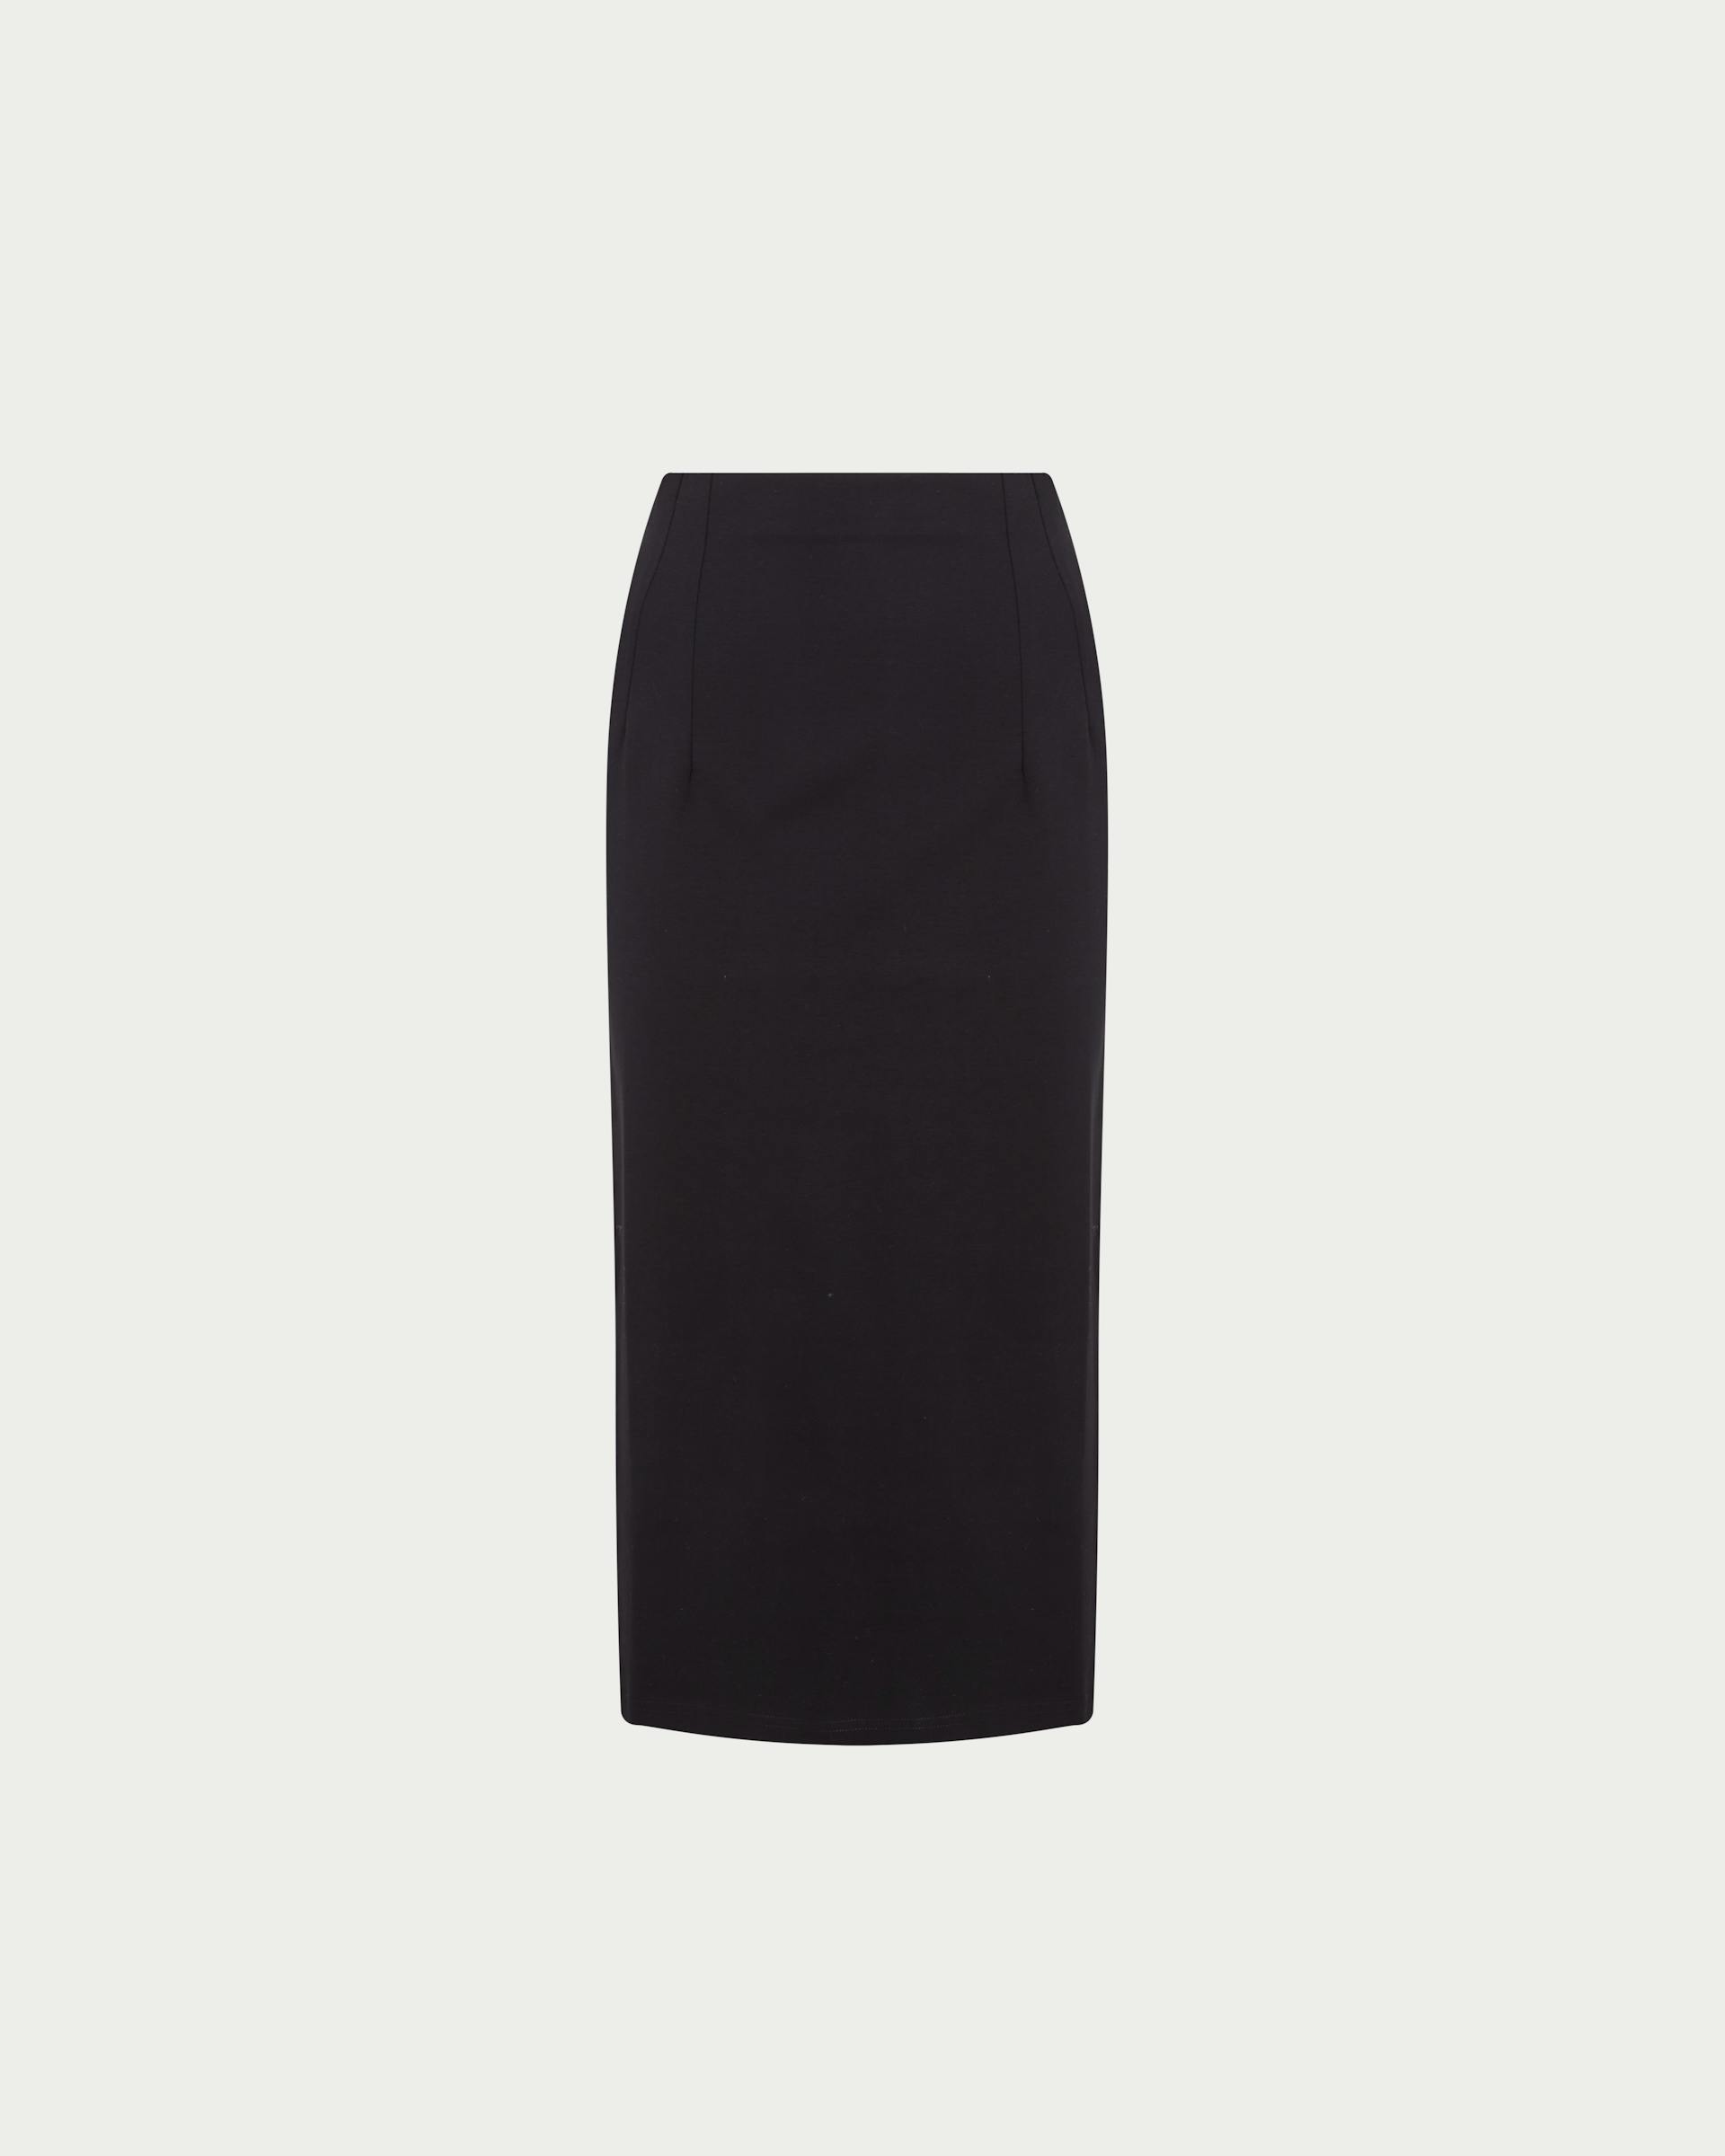 https://a.storyblok.com/f/199965/4000x5000/a159ba0d77/capri-skirt-black-front.jpg